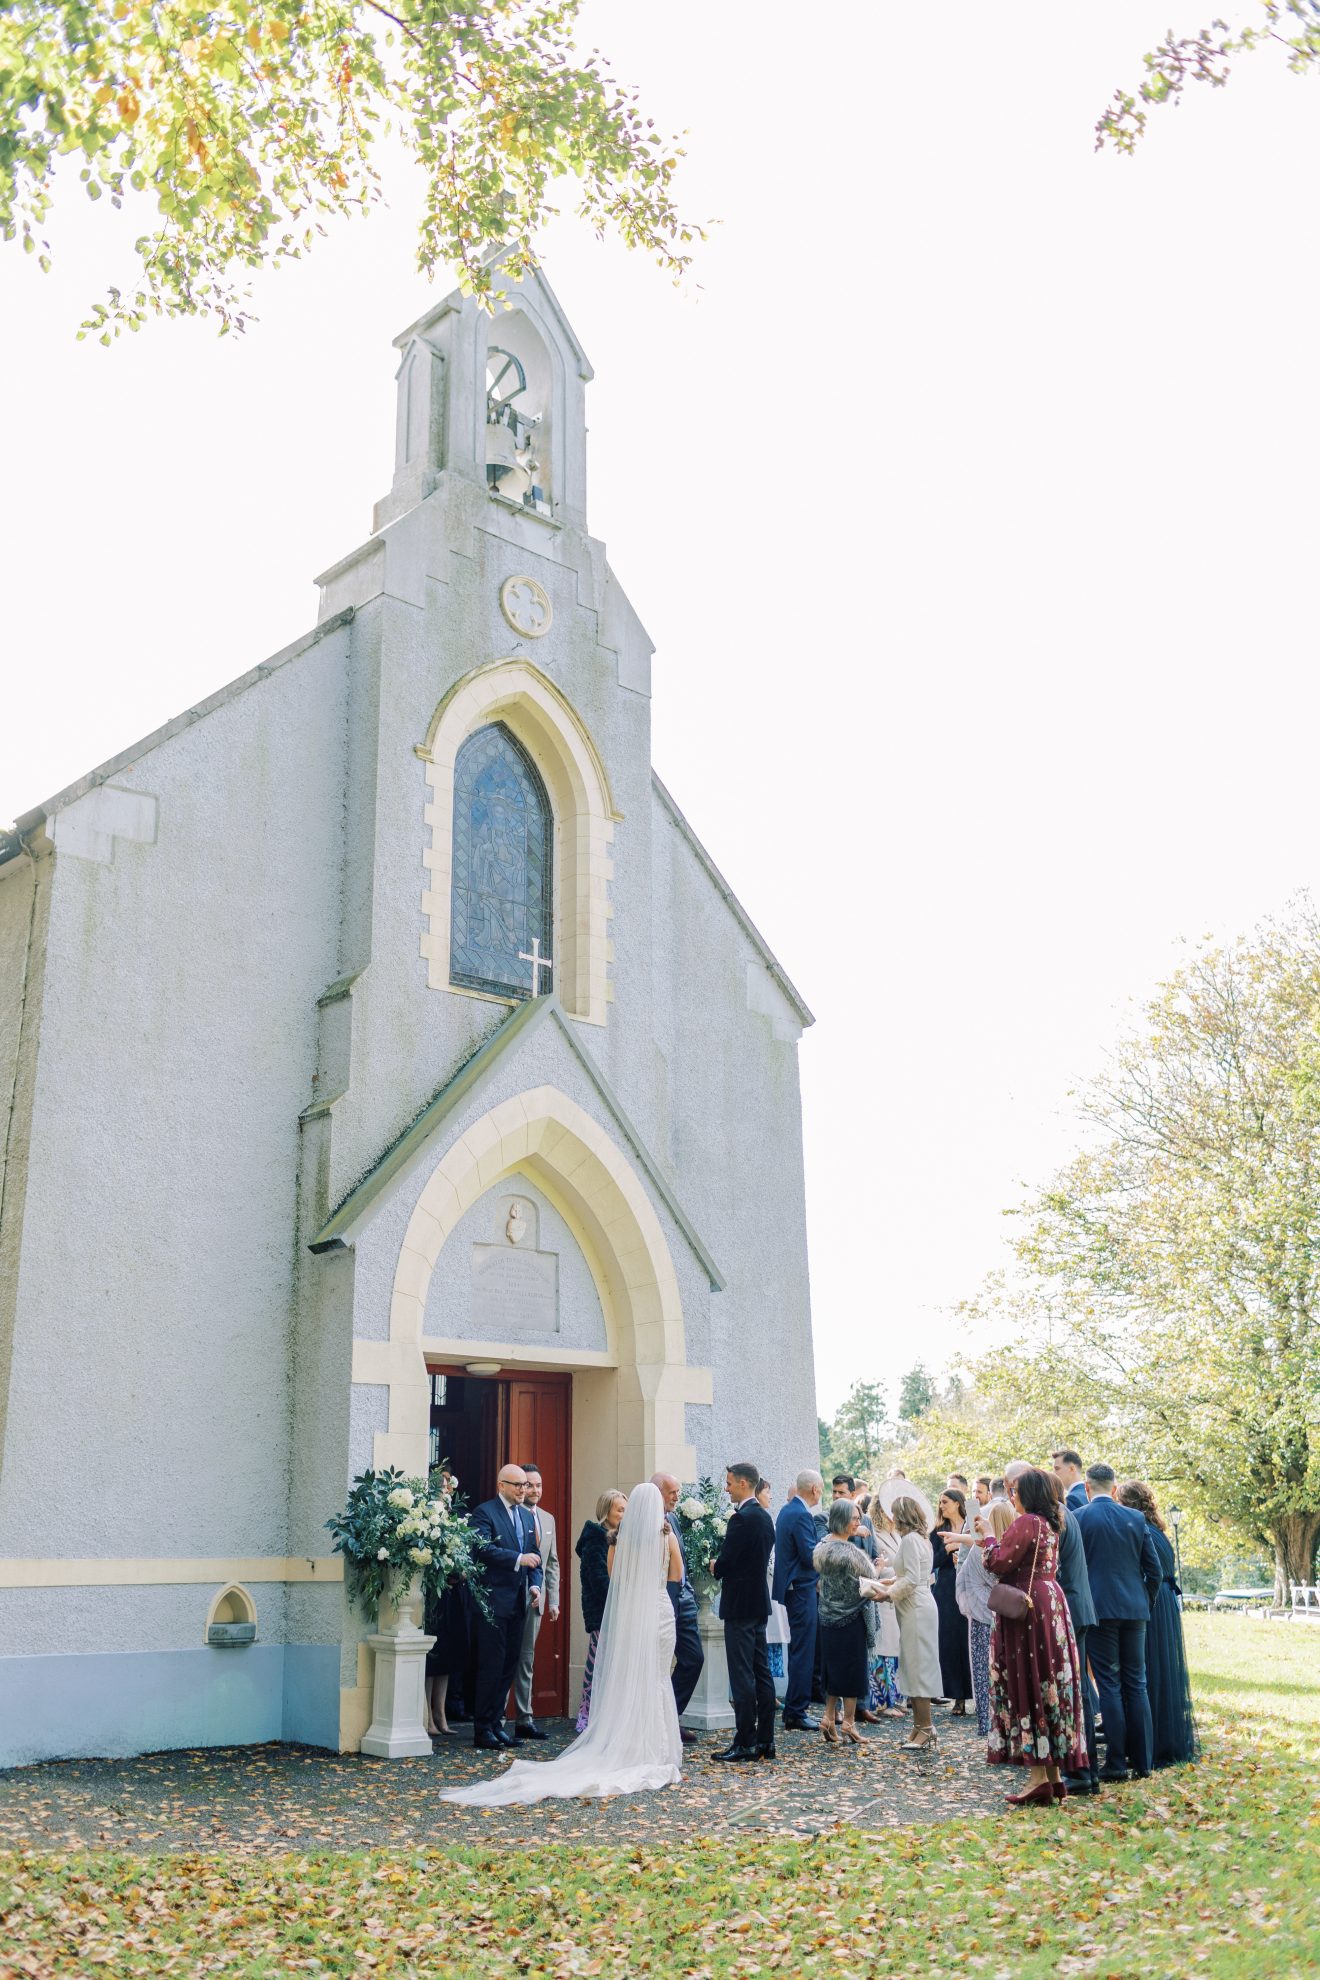 Church for wedding ceremony